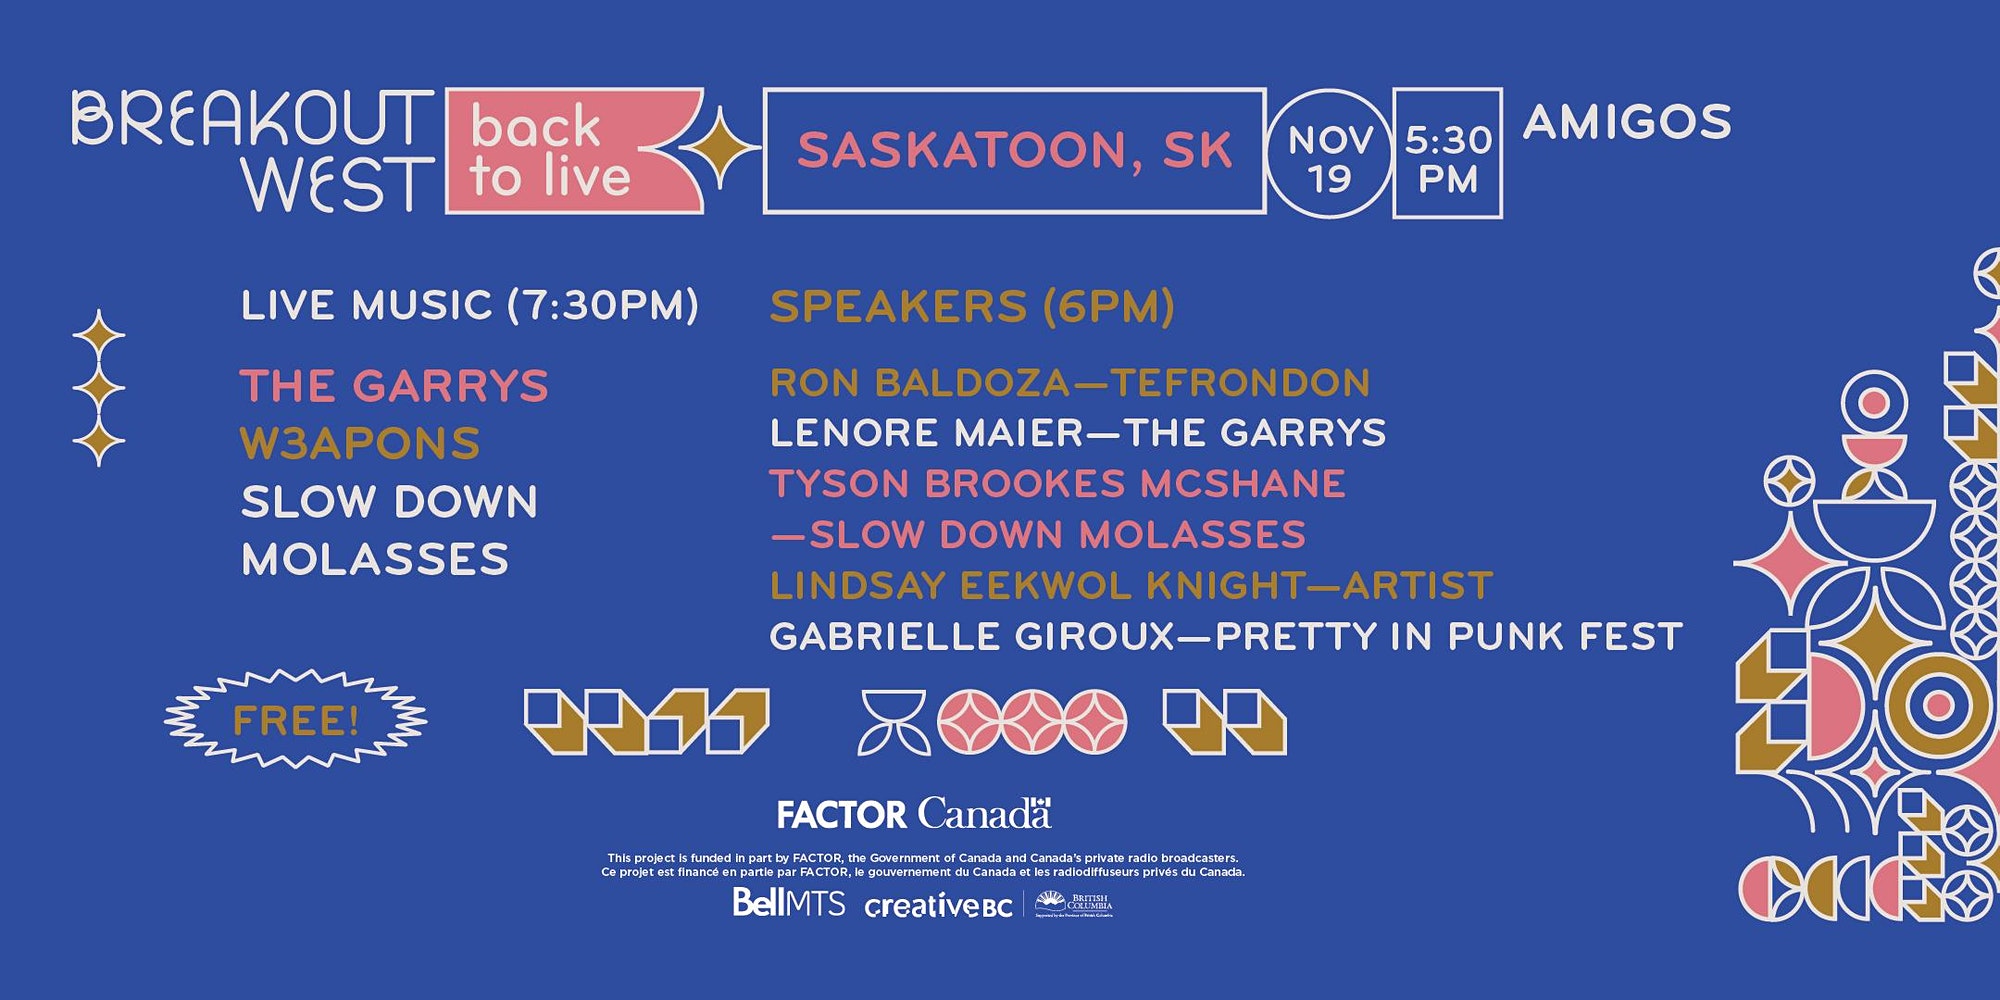 Back to Live &#8211; Saskatoon &#8211; BreakOut West